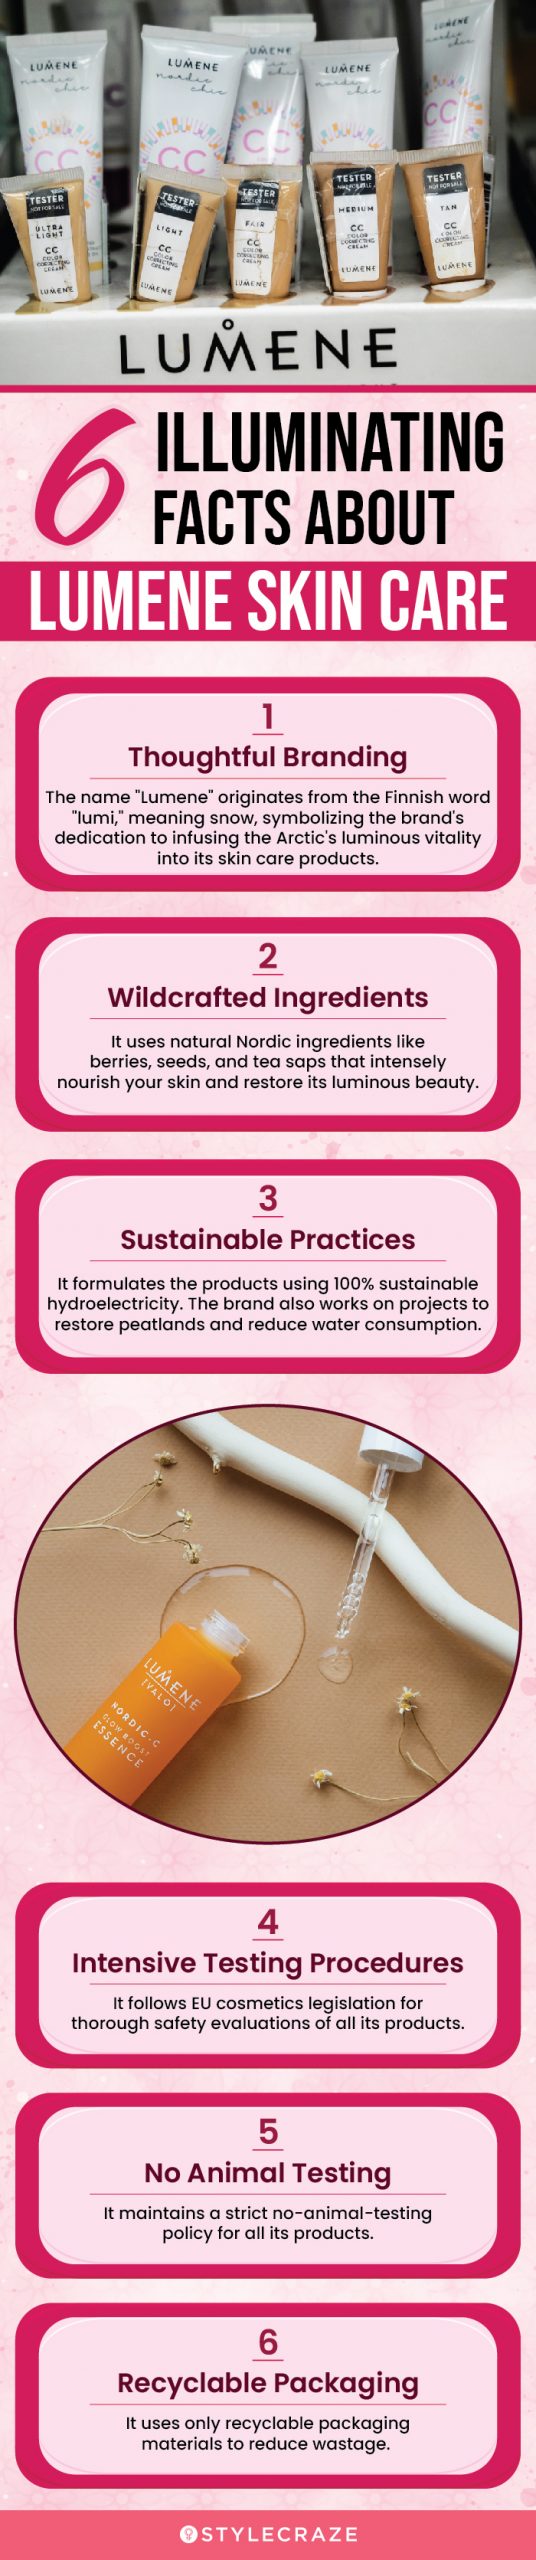 6 Illuminating Facts About Lumene Skin Care (infographic)